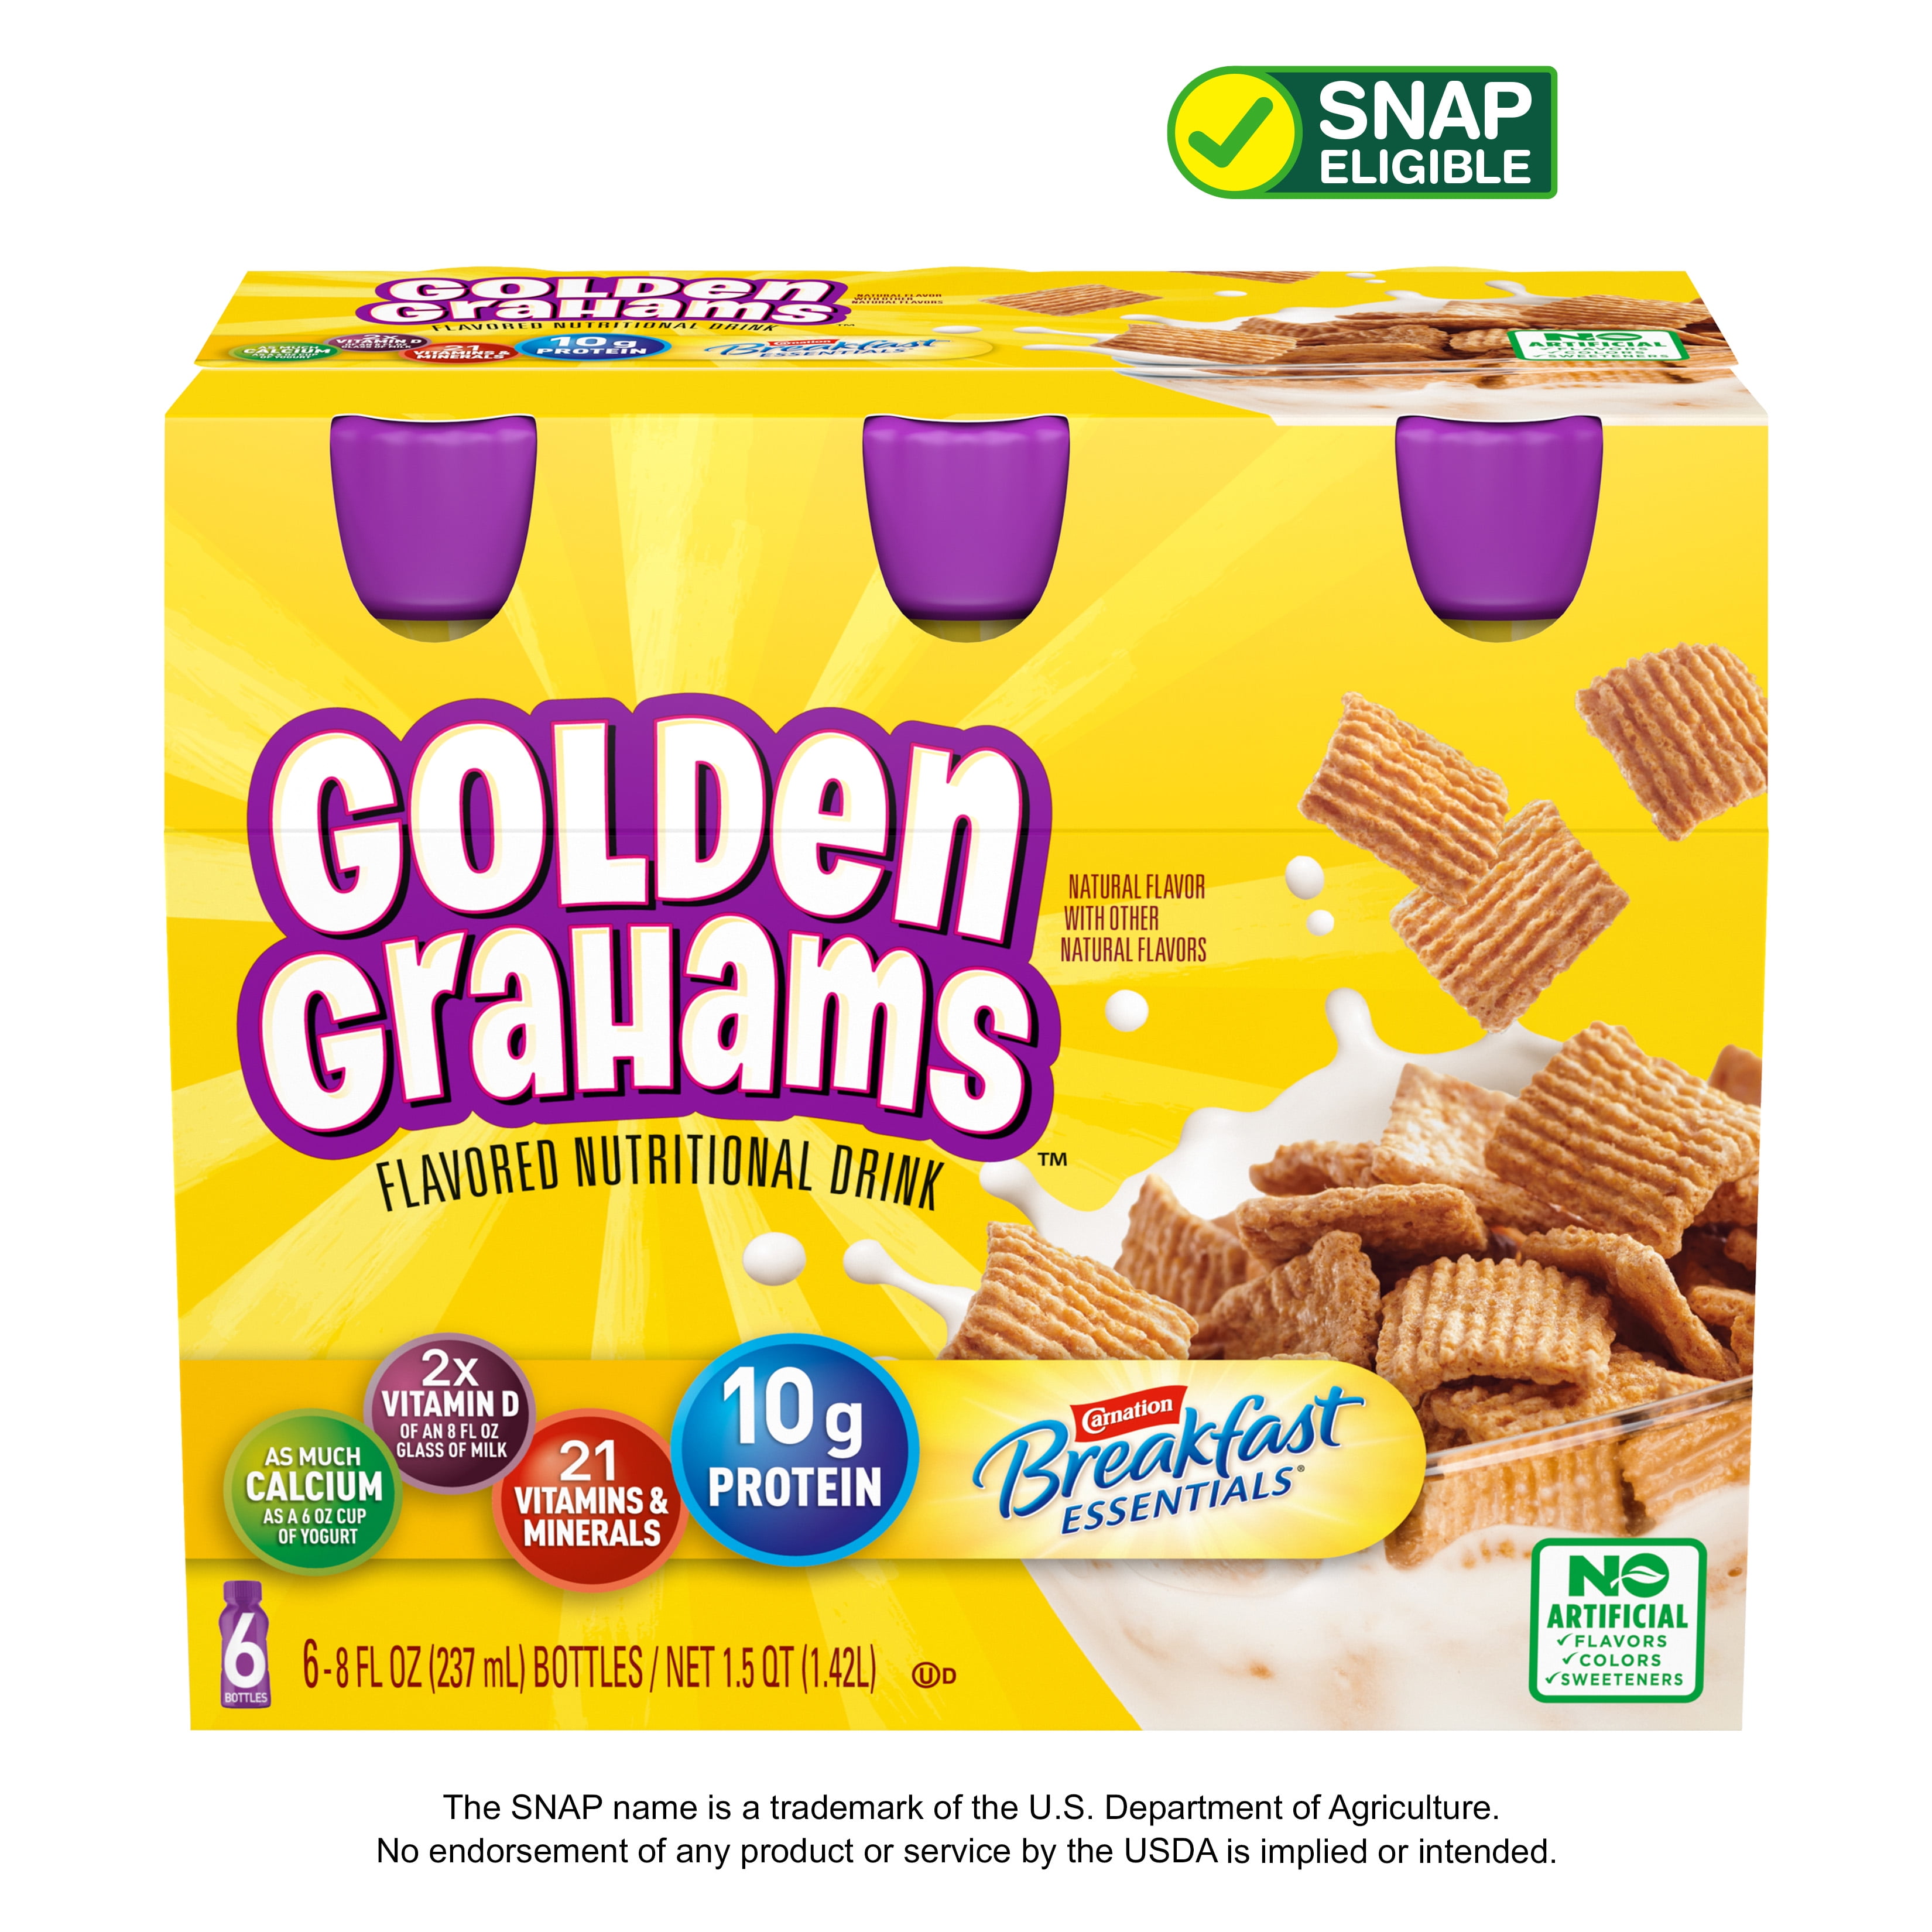 Carnation Breakfast Essentials Golden Grahams Flavored Nutritional Shake, 10 g Protein, 6 - 8 fl oz Bottles